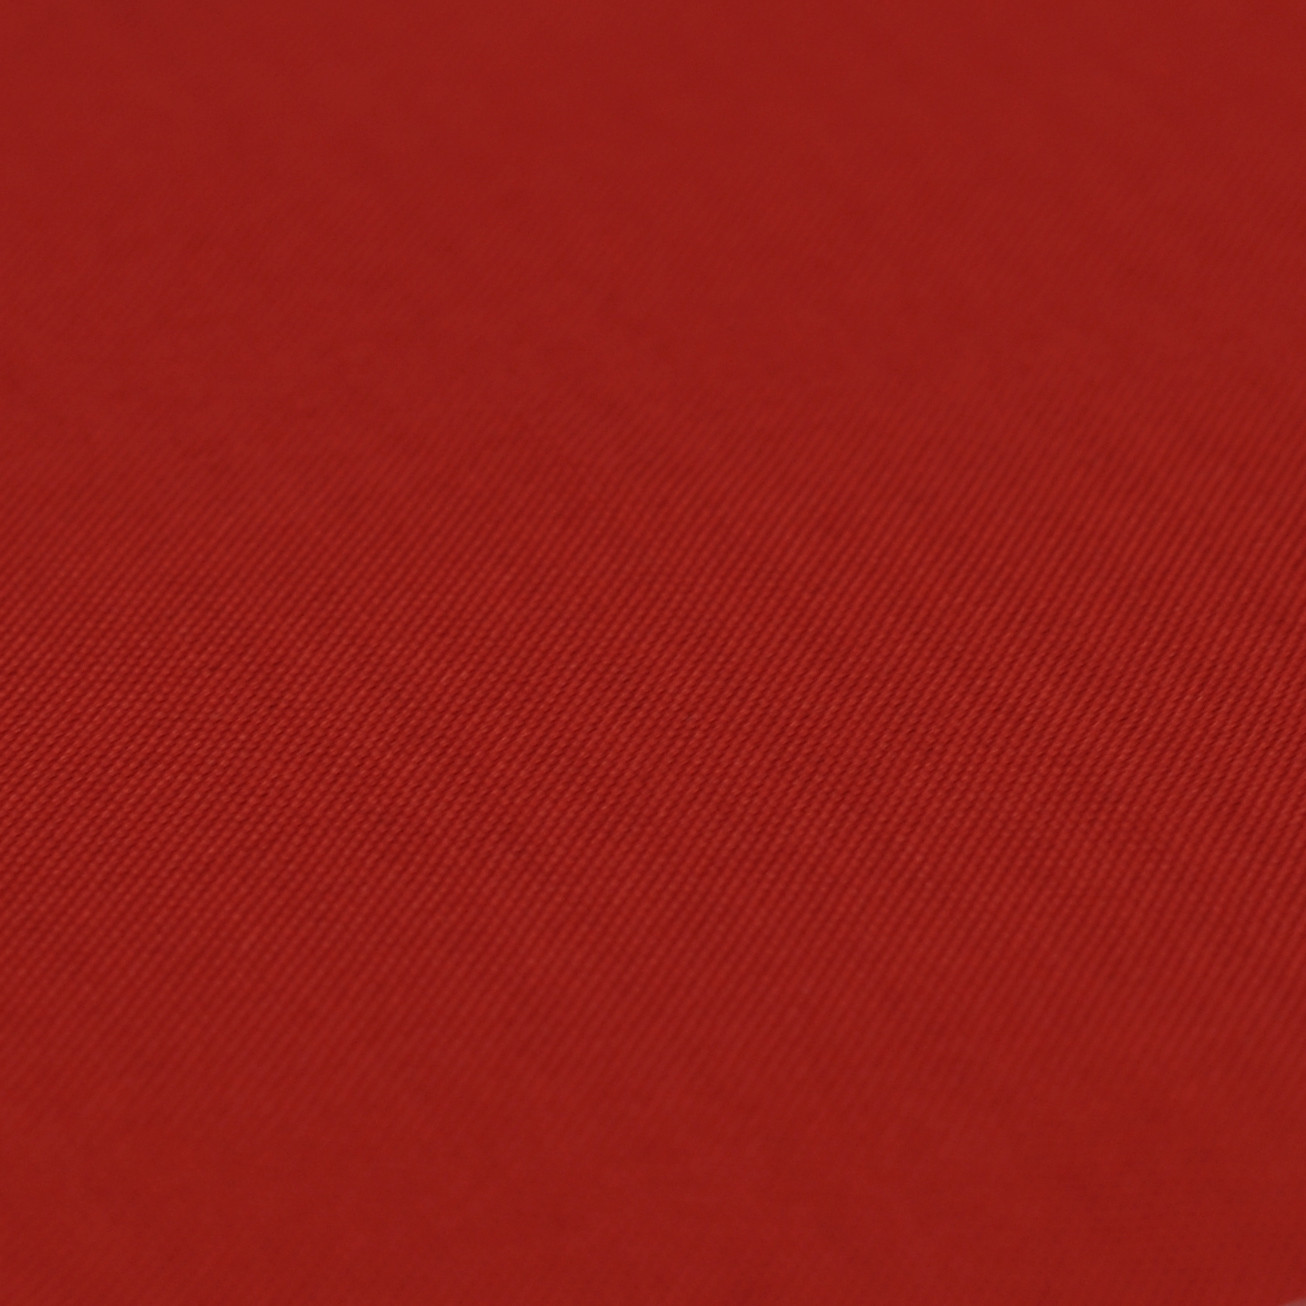 Määrdumiskindel kandiline laudlina Restly punane 220x220